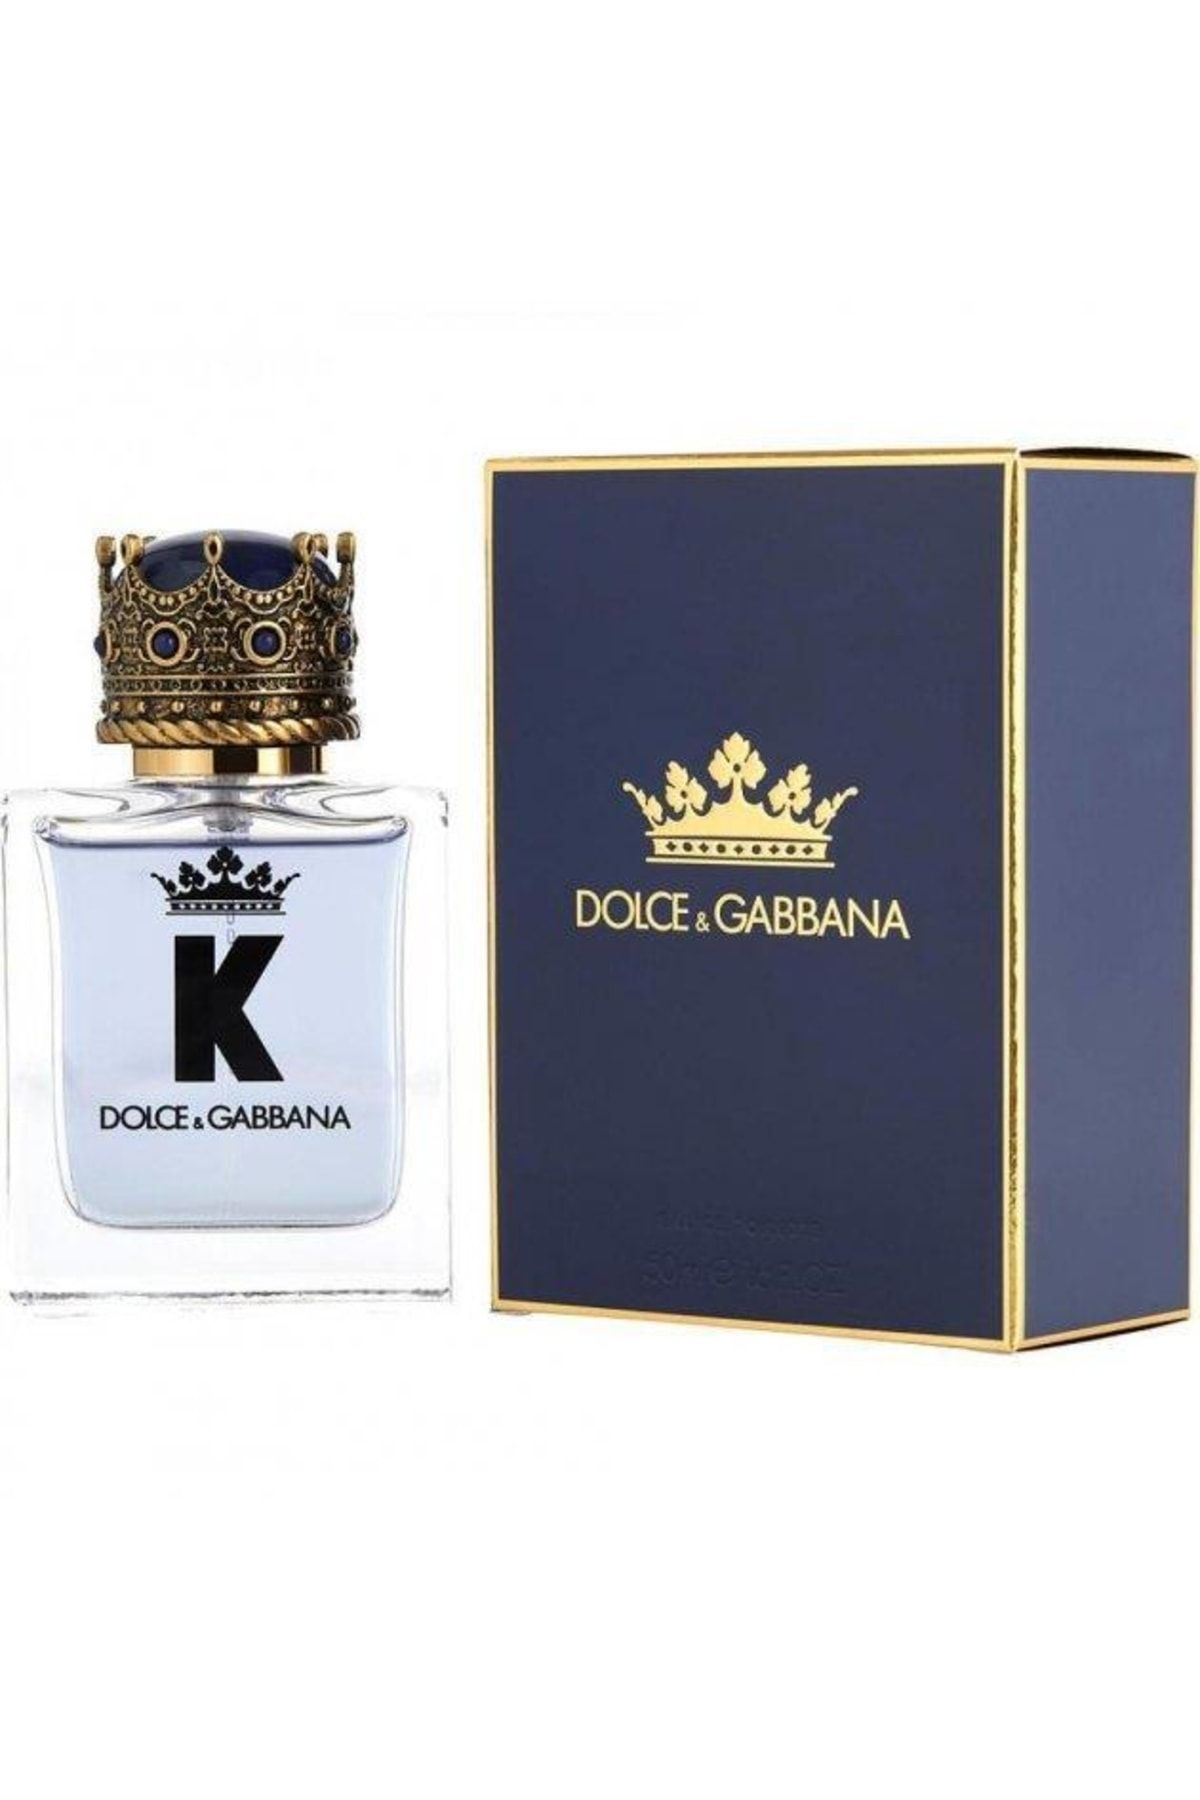 Q by dolce gabbana отзывы. Dolce & Gabbana k for men 100 мл. Dolce Gabbana King 100ml. Dolce and Gabbana King 50 ml. Dolce&Gabbana King туалетная вода 50 мл.